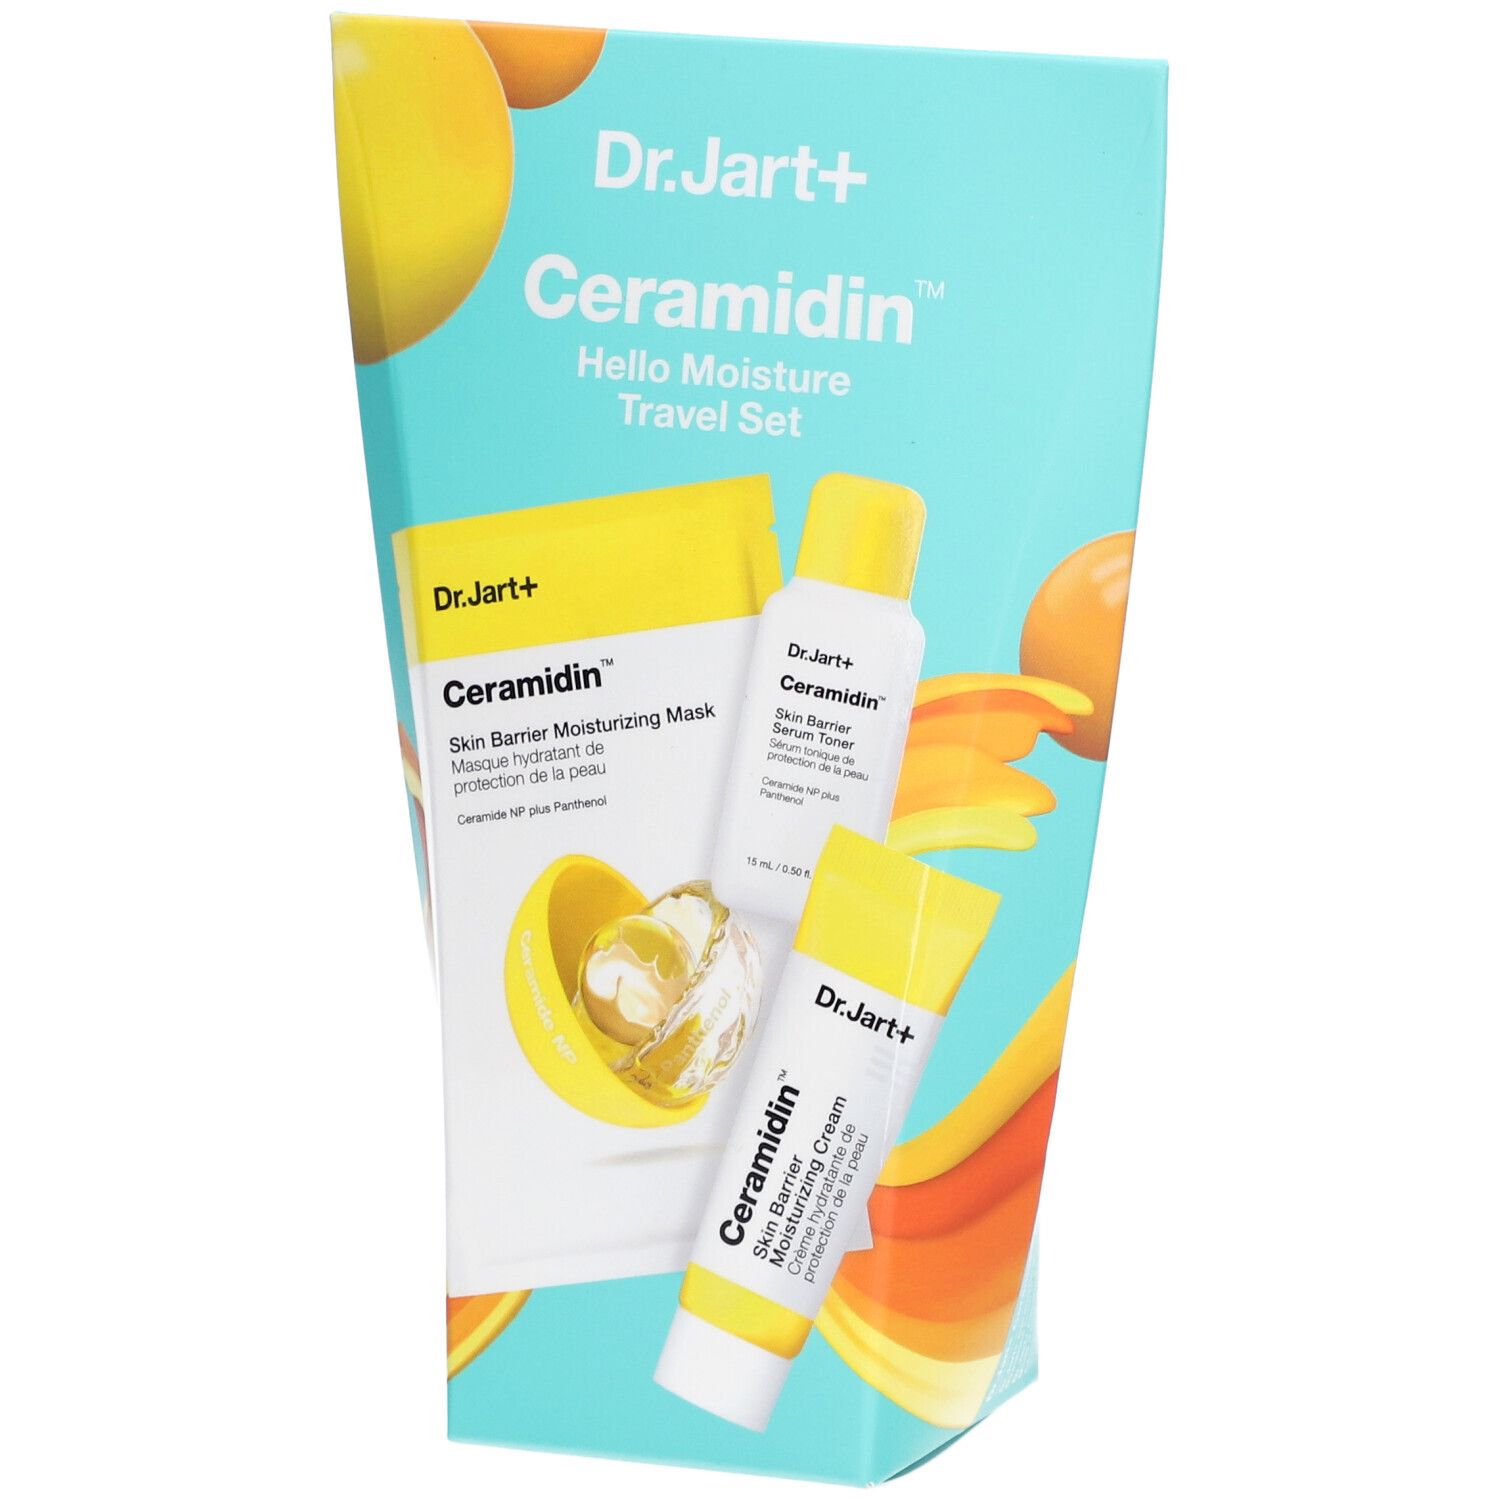 Dr. Jart+ CERAMIDIN™ Hello Moisture Travel Set + Ceramides